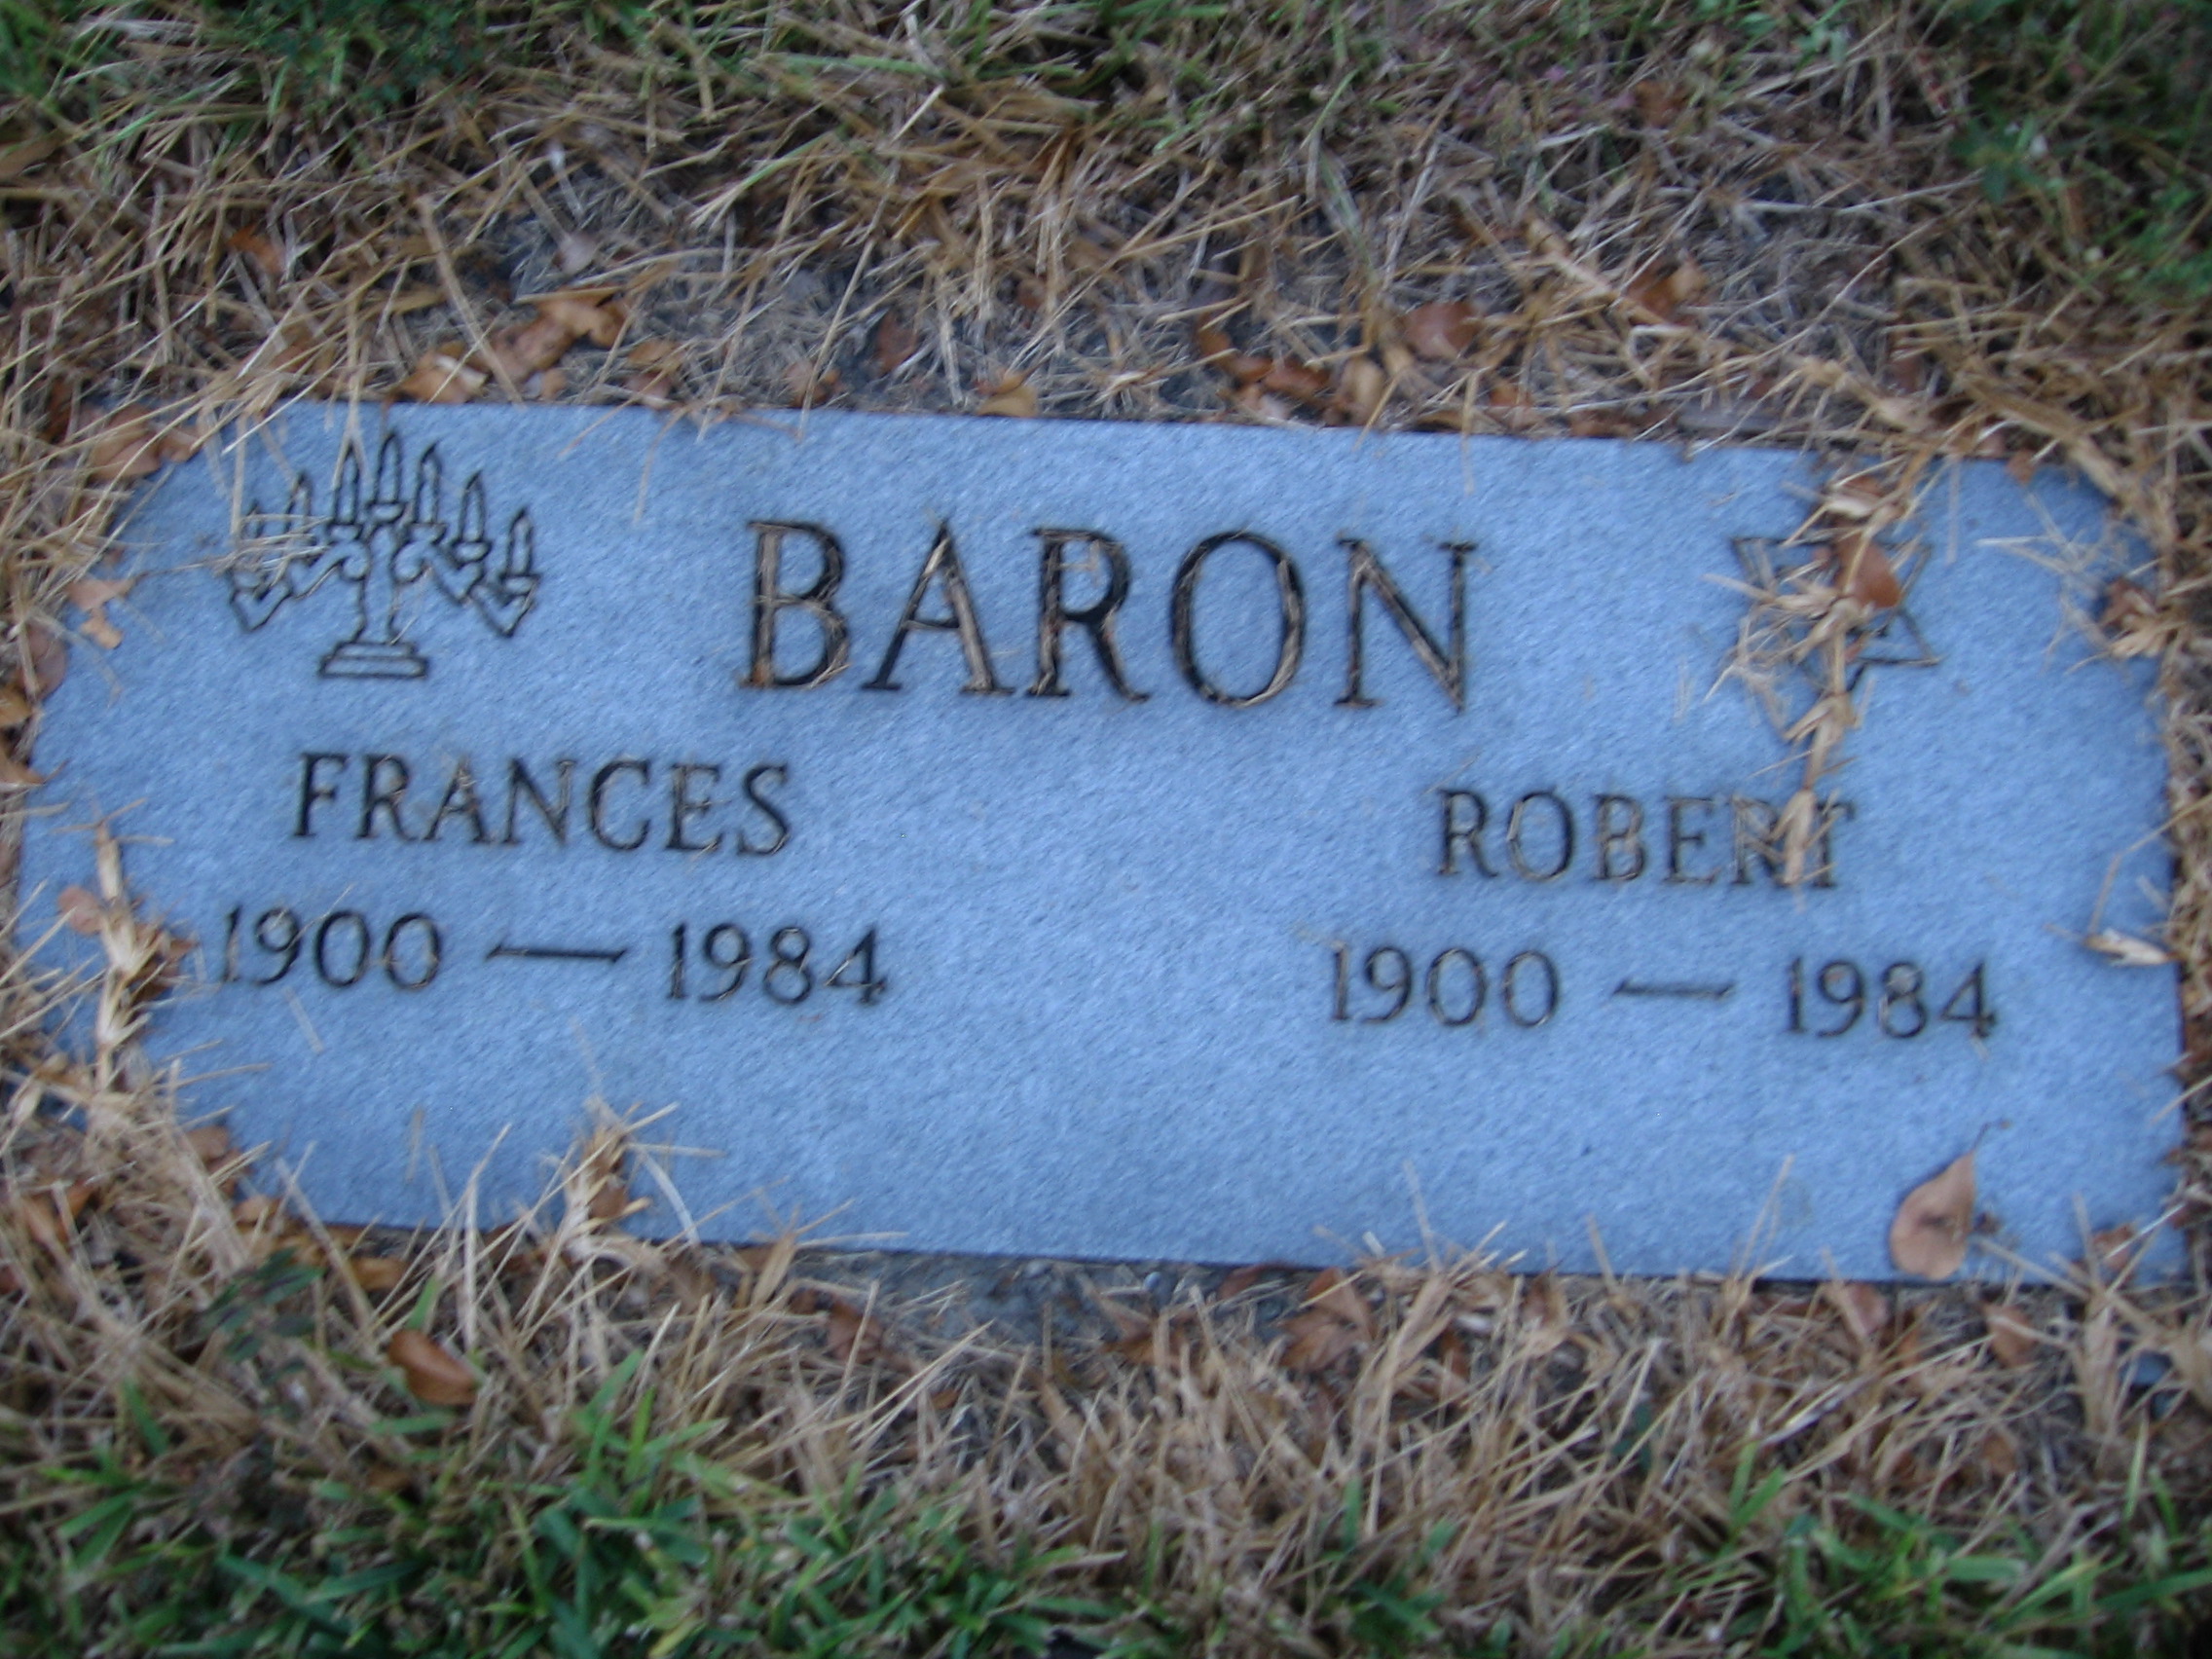 Frances Baron